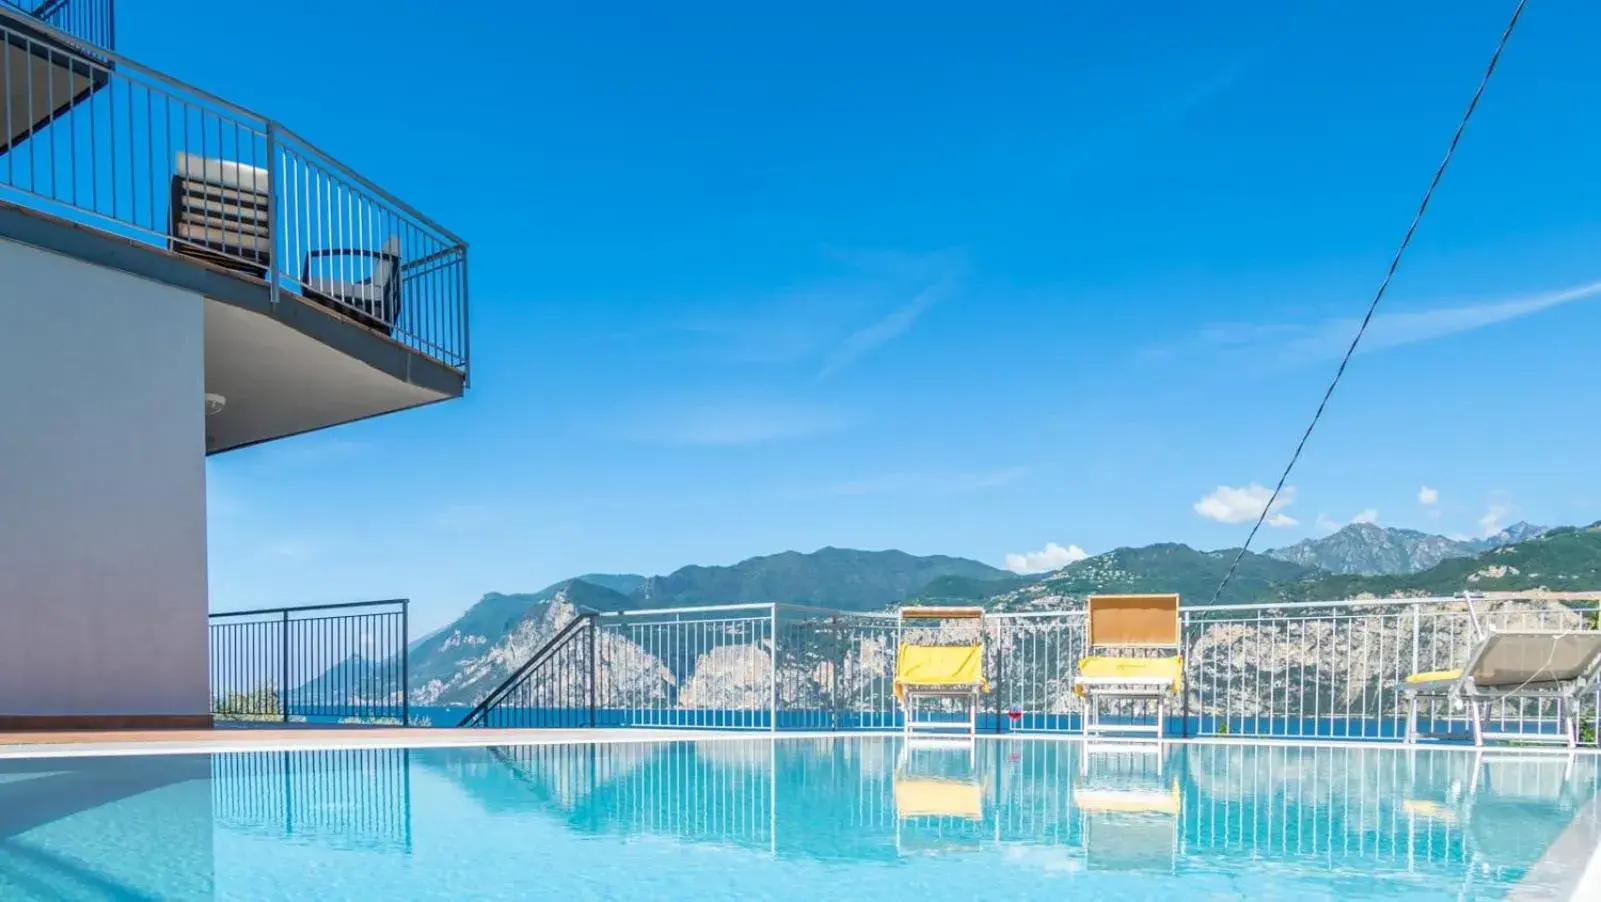 Swimming Pool in Hotel Casa Marinella